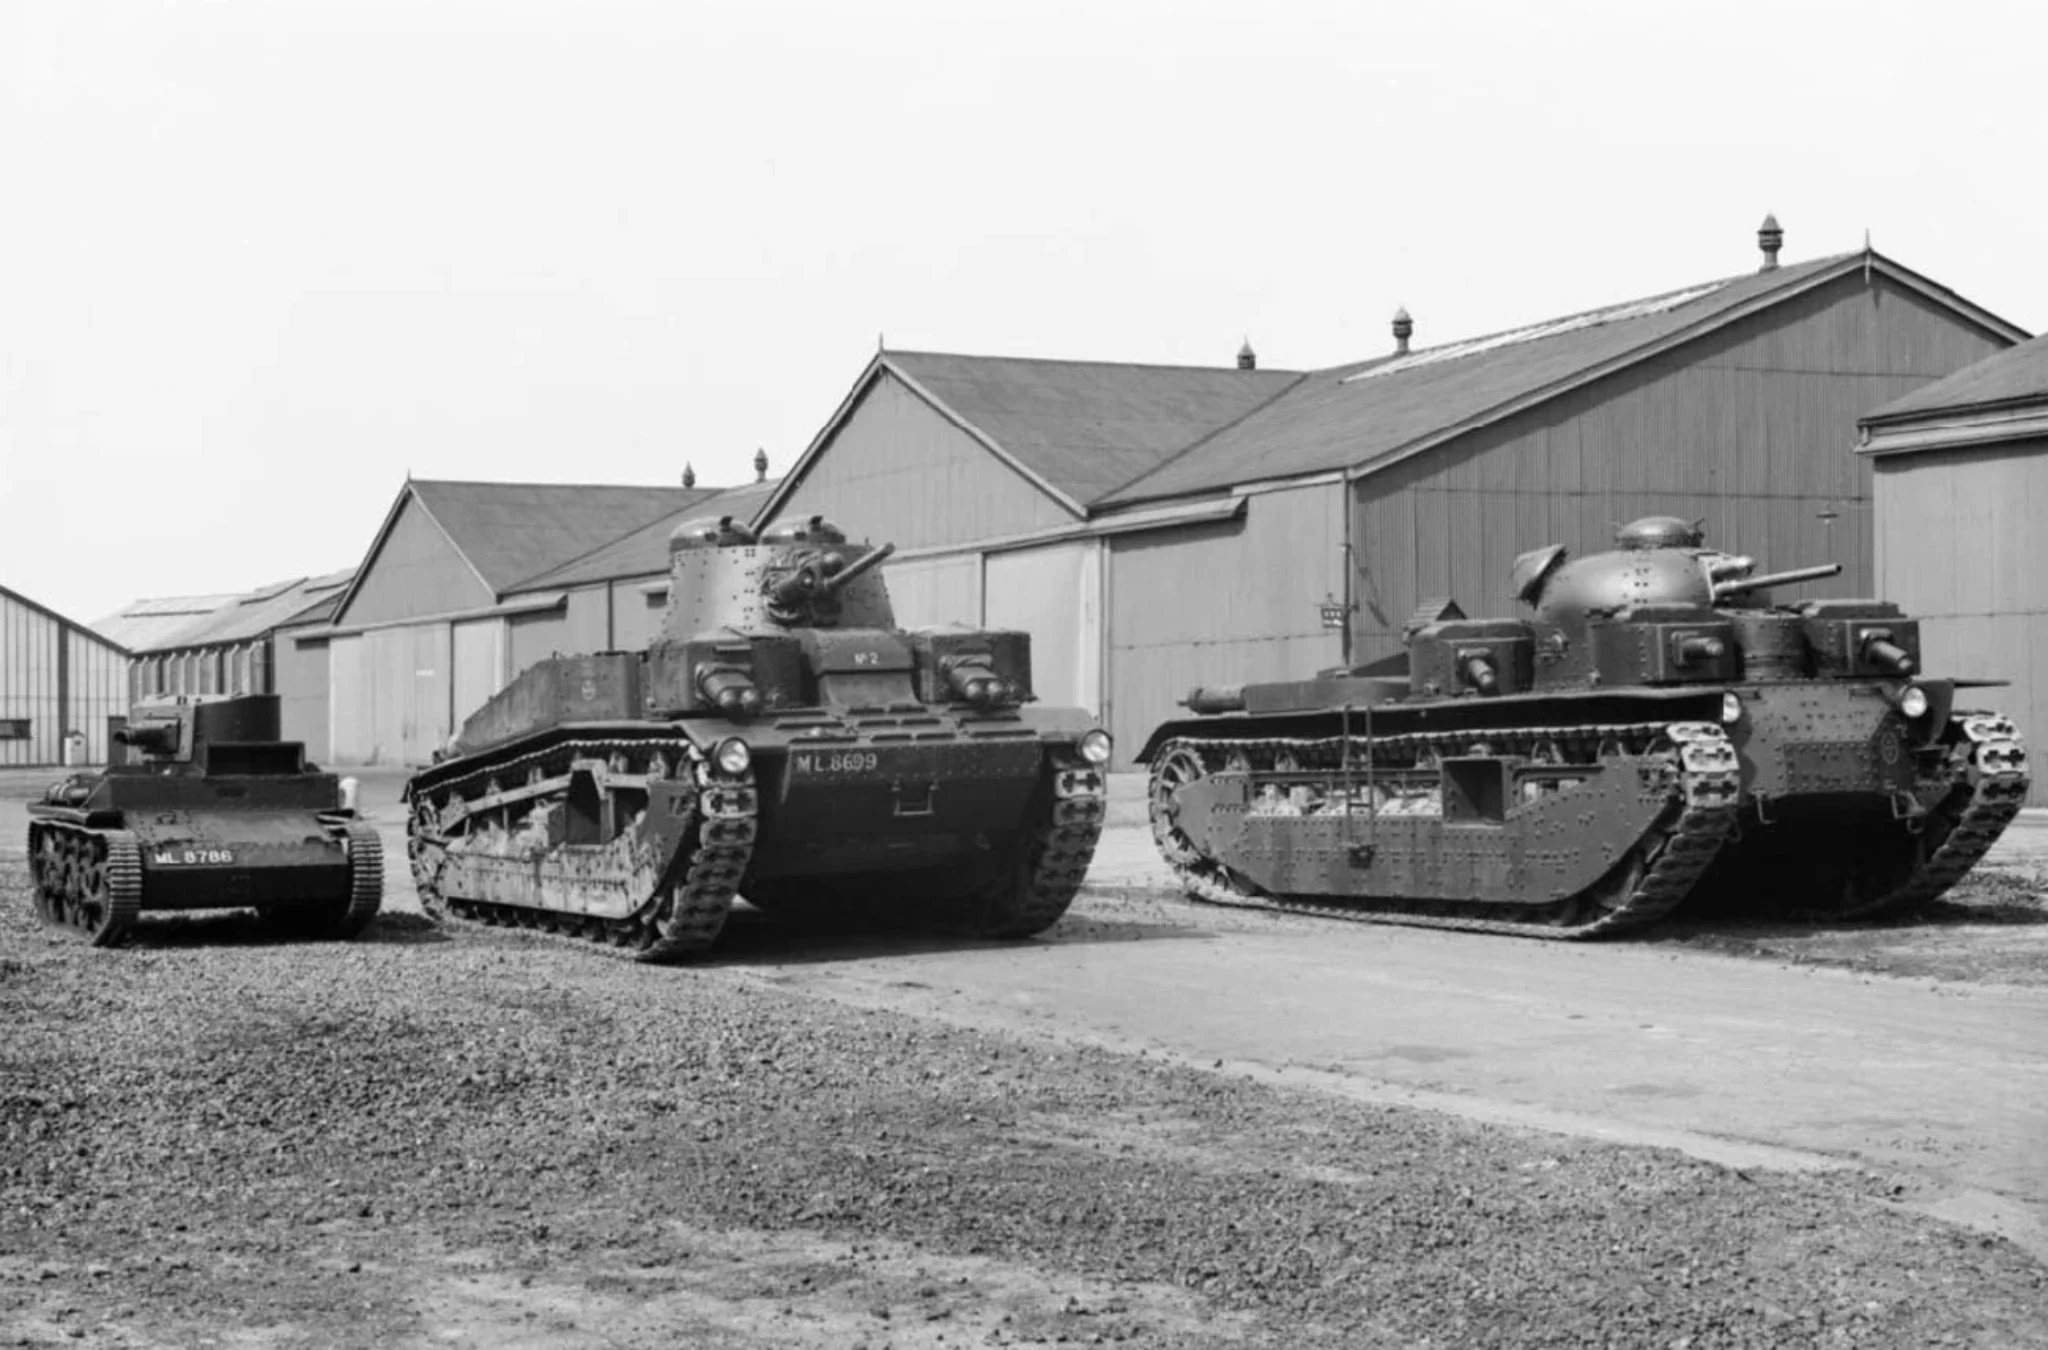 Первый американский танк. A1e1 independent танк. Vickers a1e1. Танк Виккерс МК 1. Английский тяжелый танк а1е1 Индепендент.